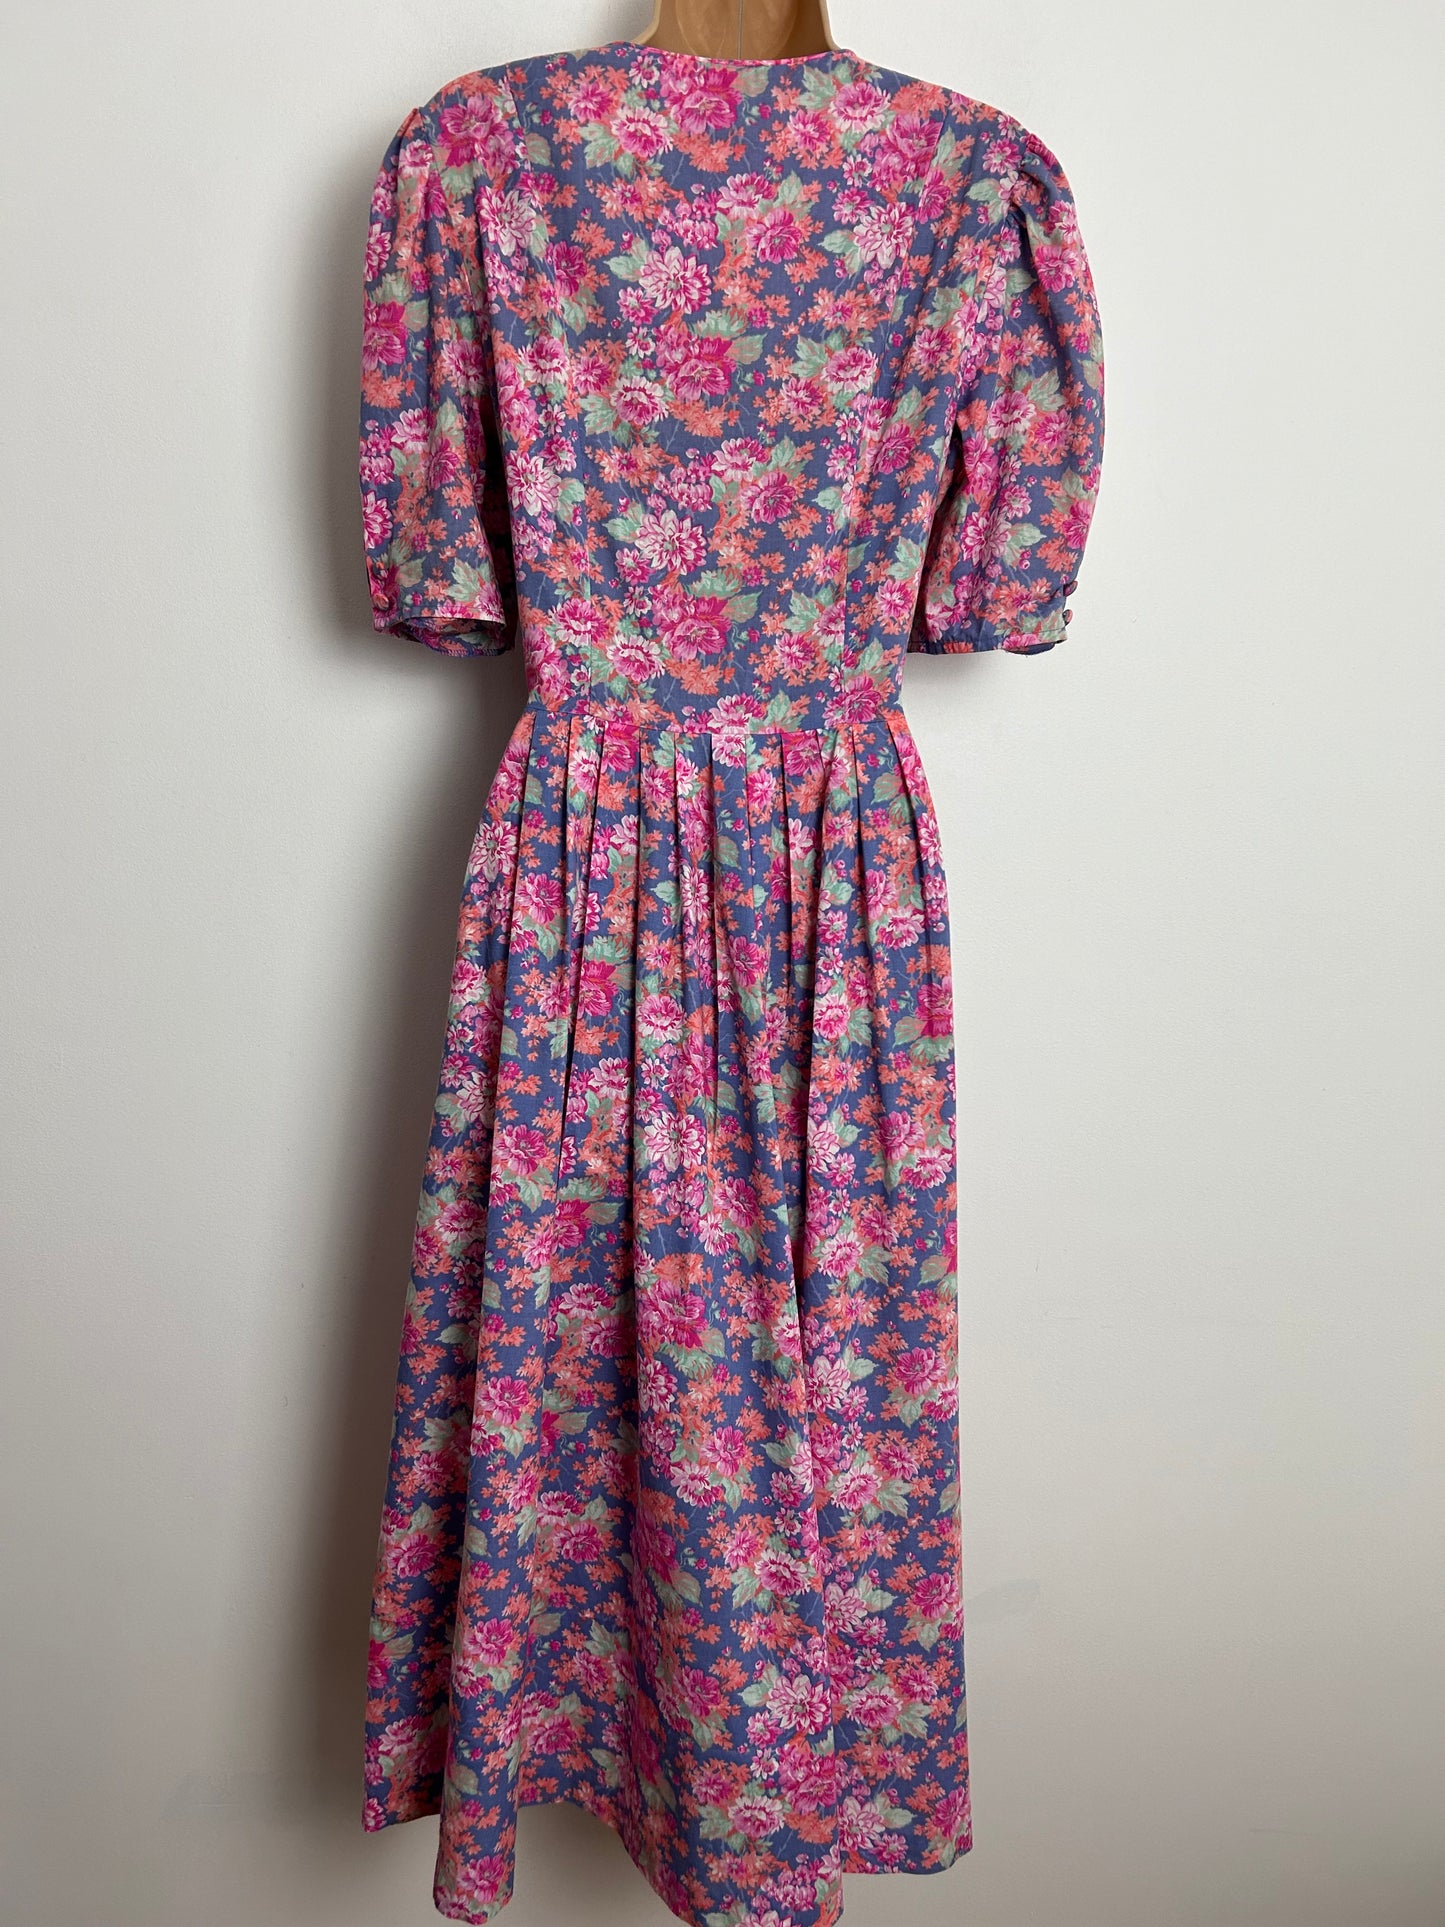 Vintage 1980s LAURA ASHLEY UK Size 10 (14 On Label) Blue Pink & Coral Floral Print Cotton Midi Tea Dress